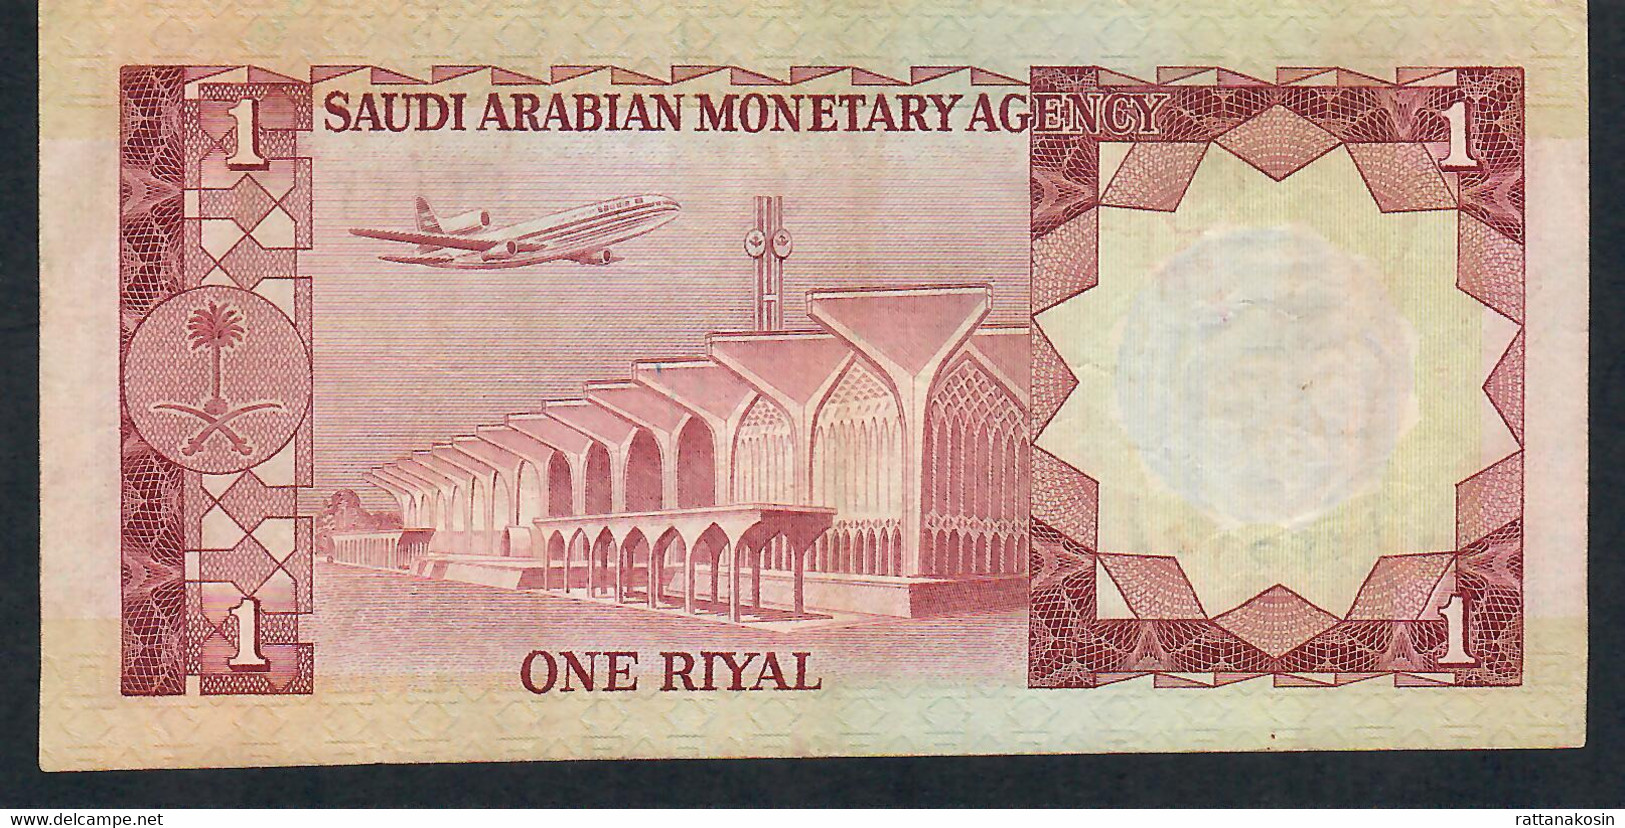 SAUDI ARABIA P16 1 RIYAL 1976 XF - Saudi Arabia